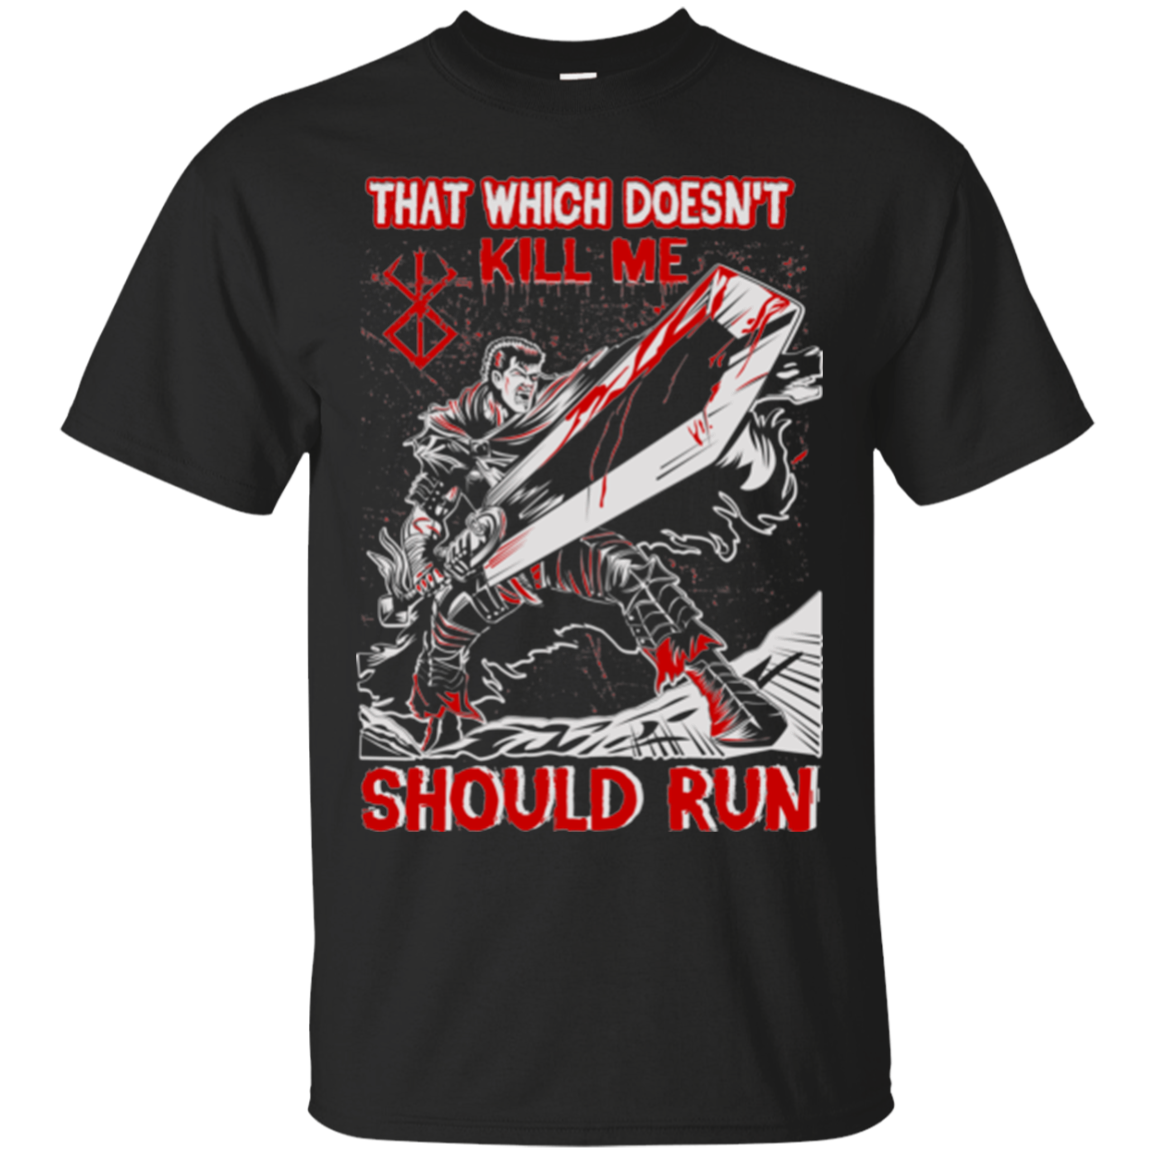 Berserk Shirts That Which Doesn't Kill Me Should Run - Teesmiley